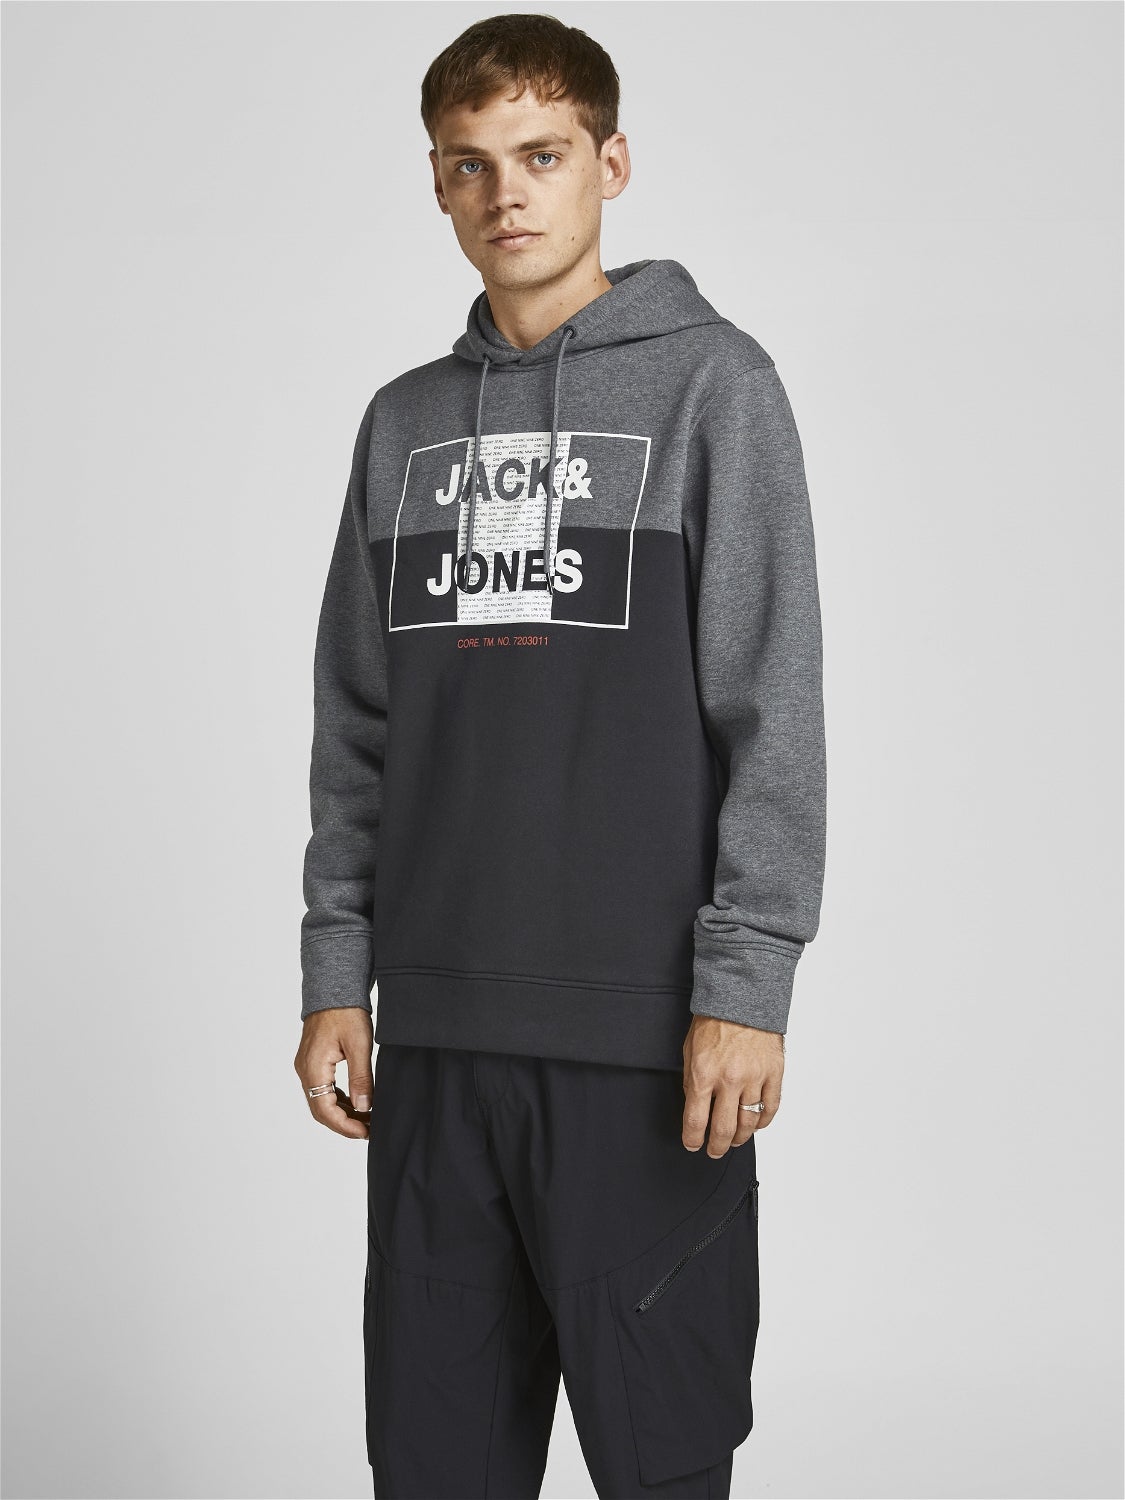 Gray S MEN FASHION Jumpers & Sweatshirts Sports discount 73% Jack & Jones sweatshirt 